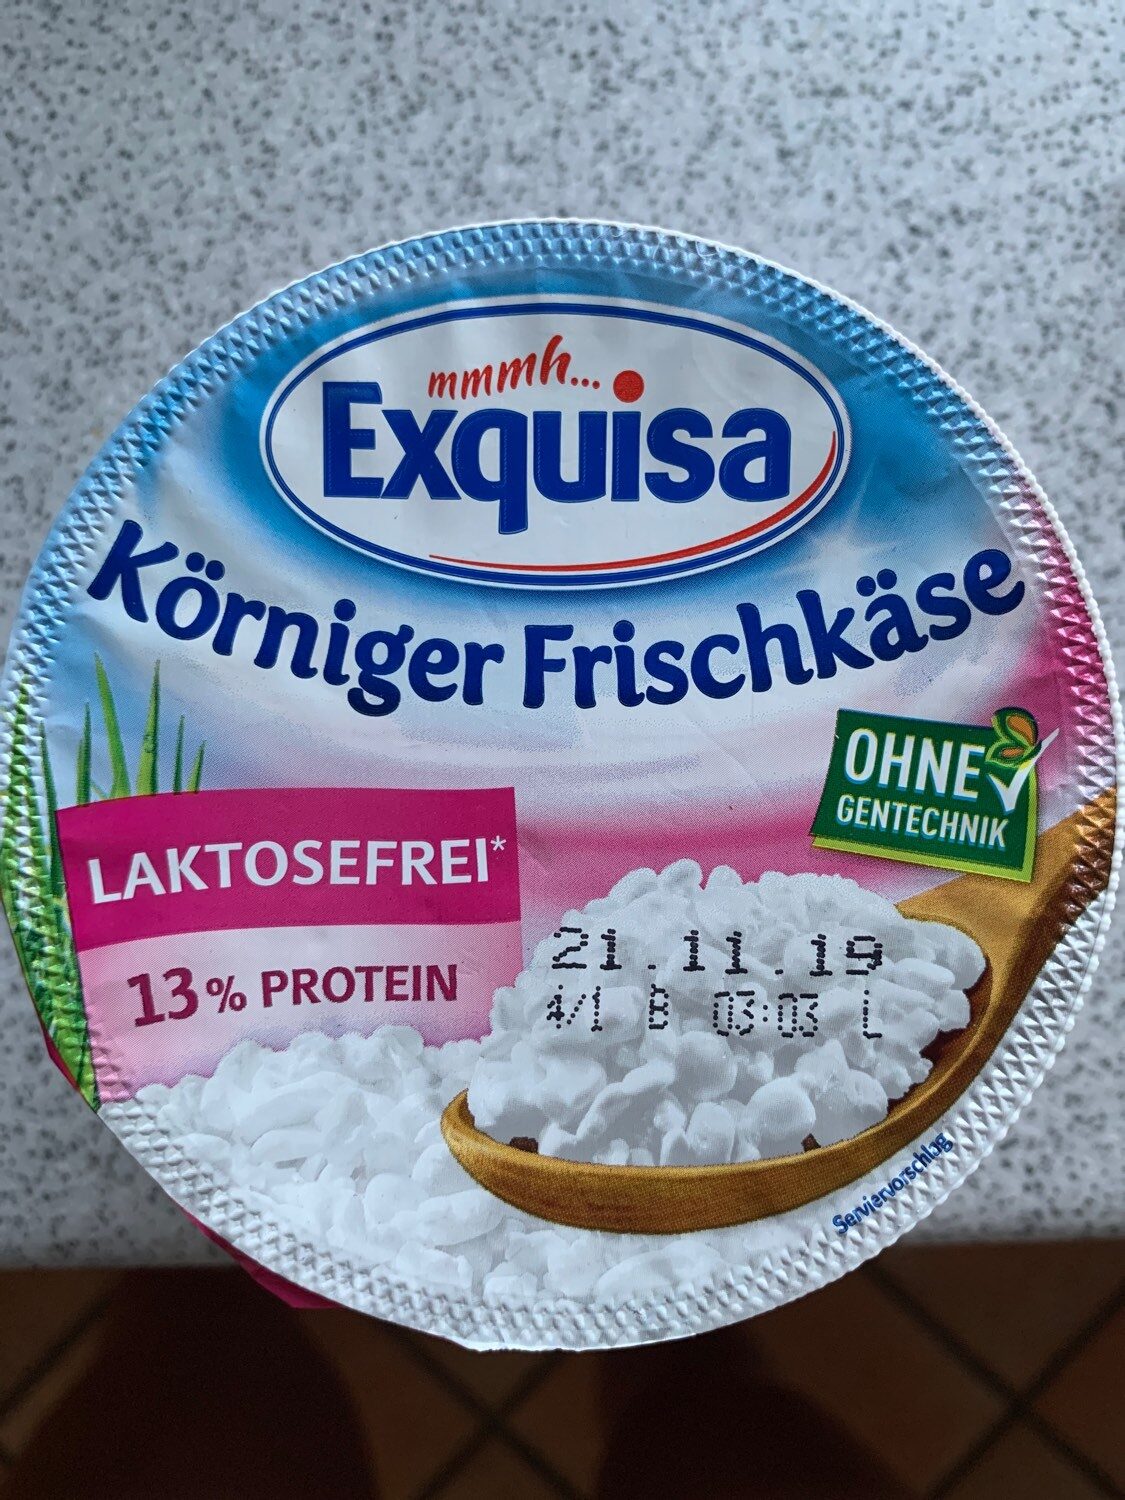 Körniger Frischkäse Laktosefrei, Natur - Product - fr